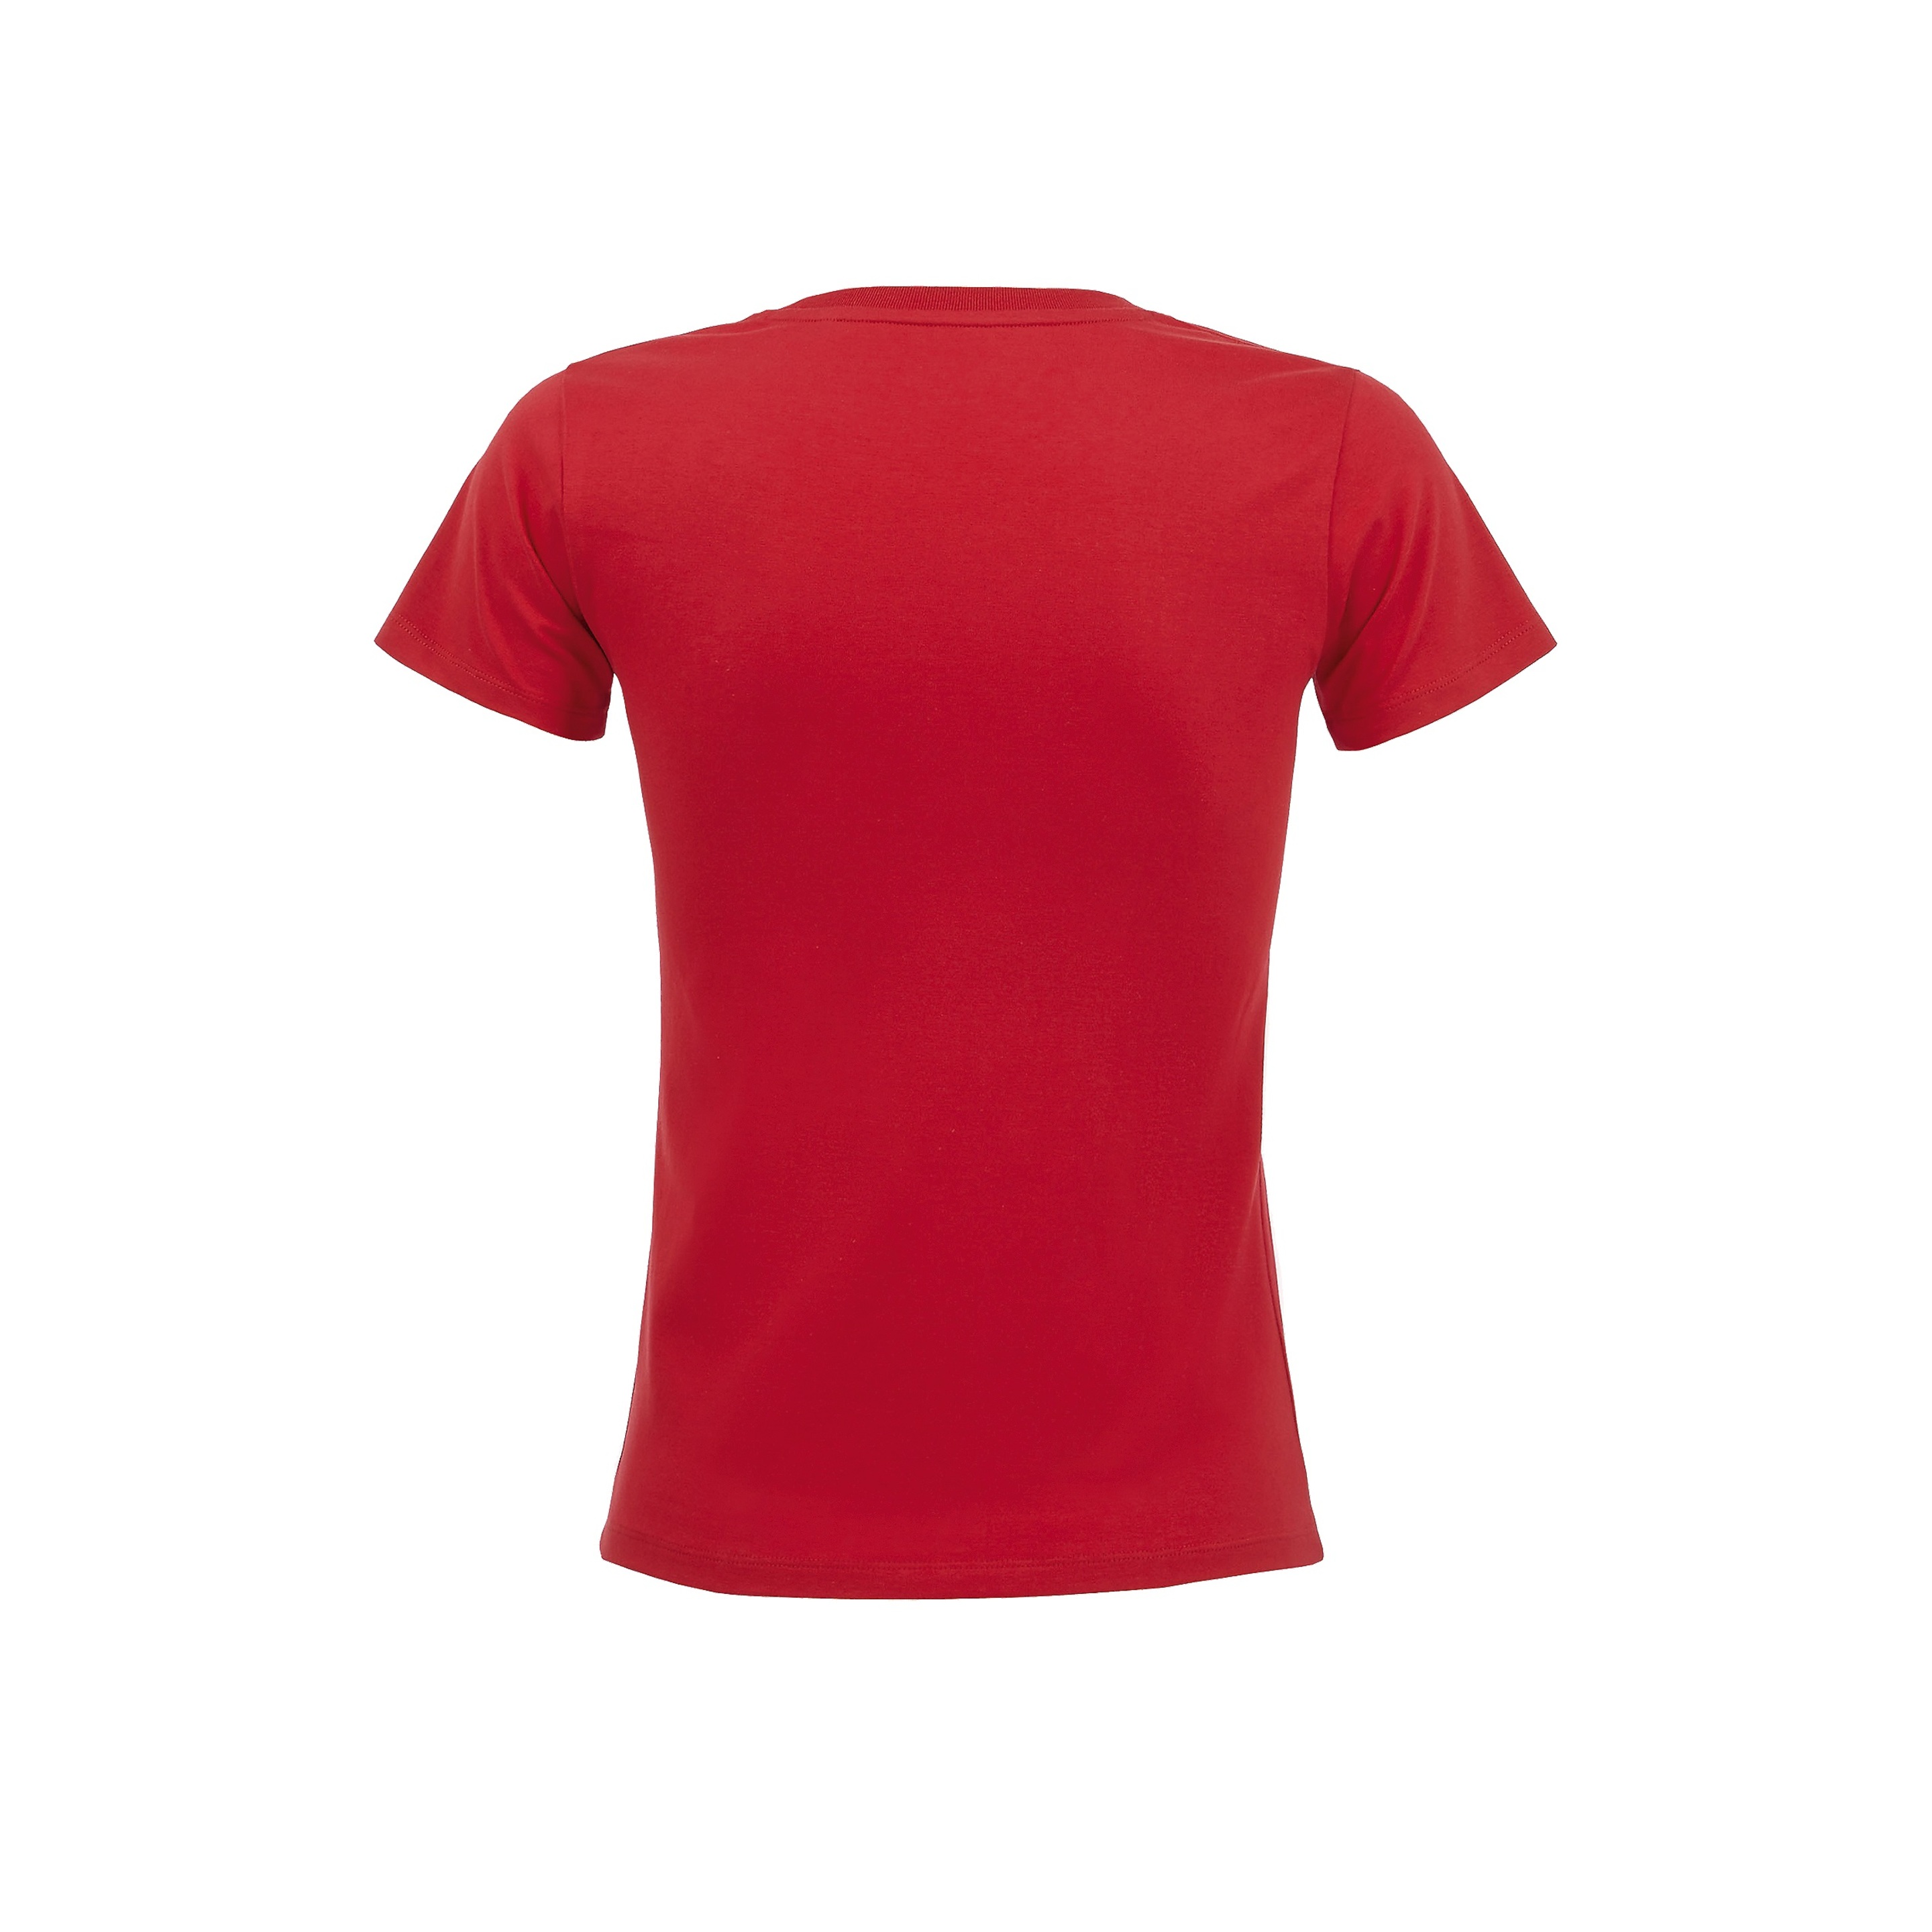 Camiseta Feminina Com Decote Redondo Em Imoeriail